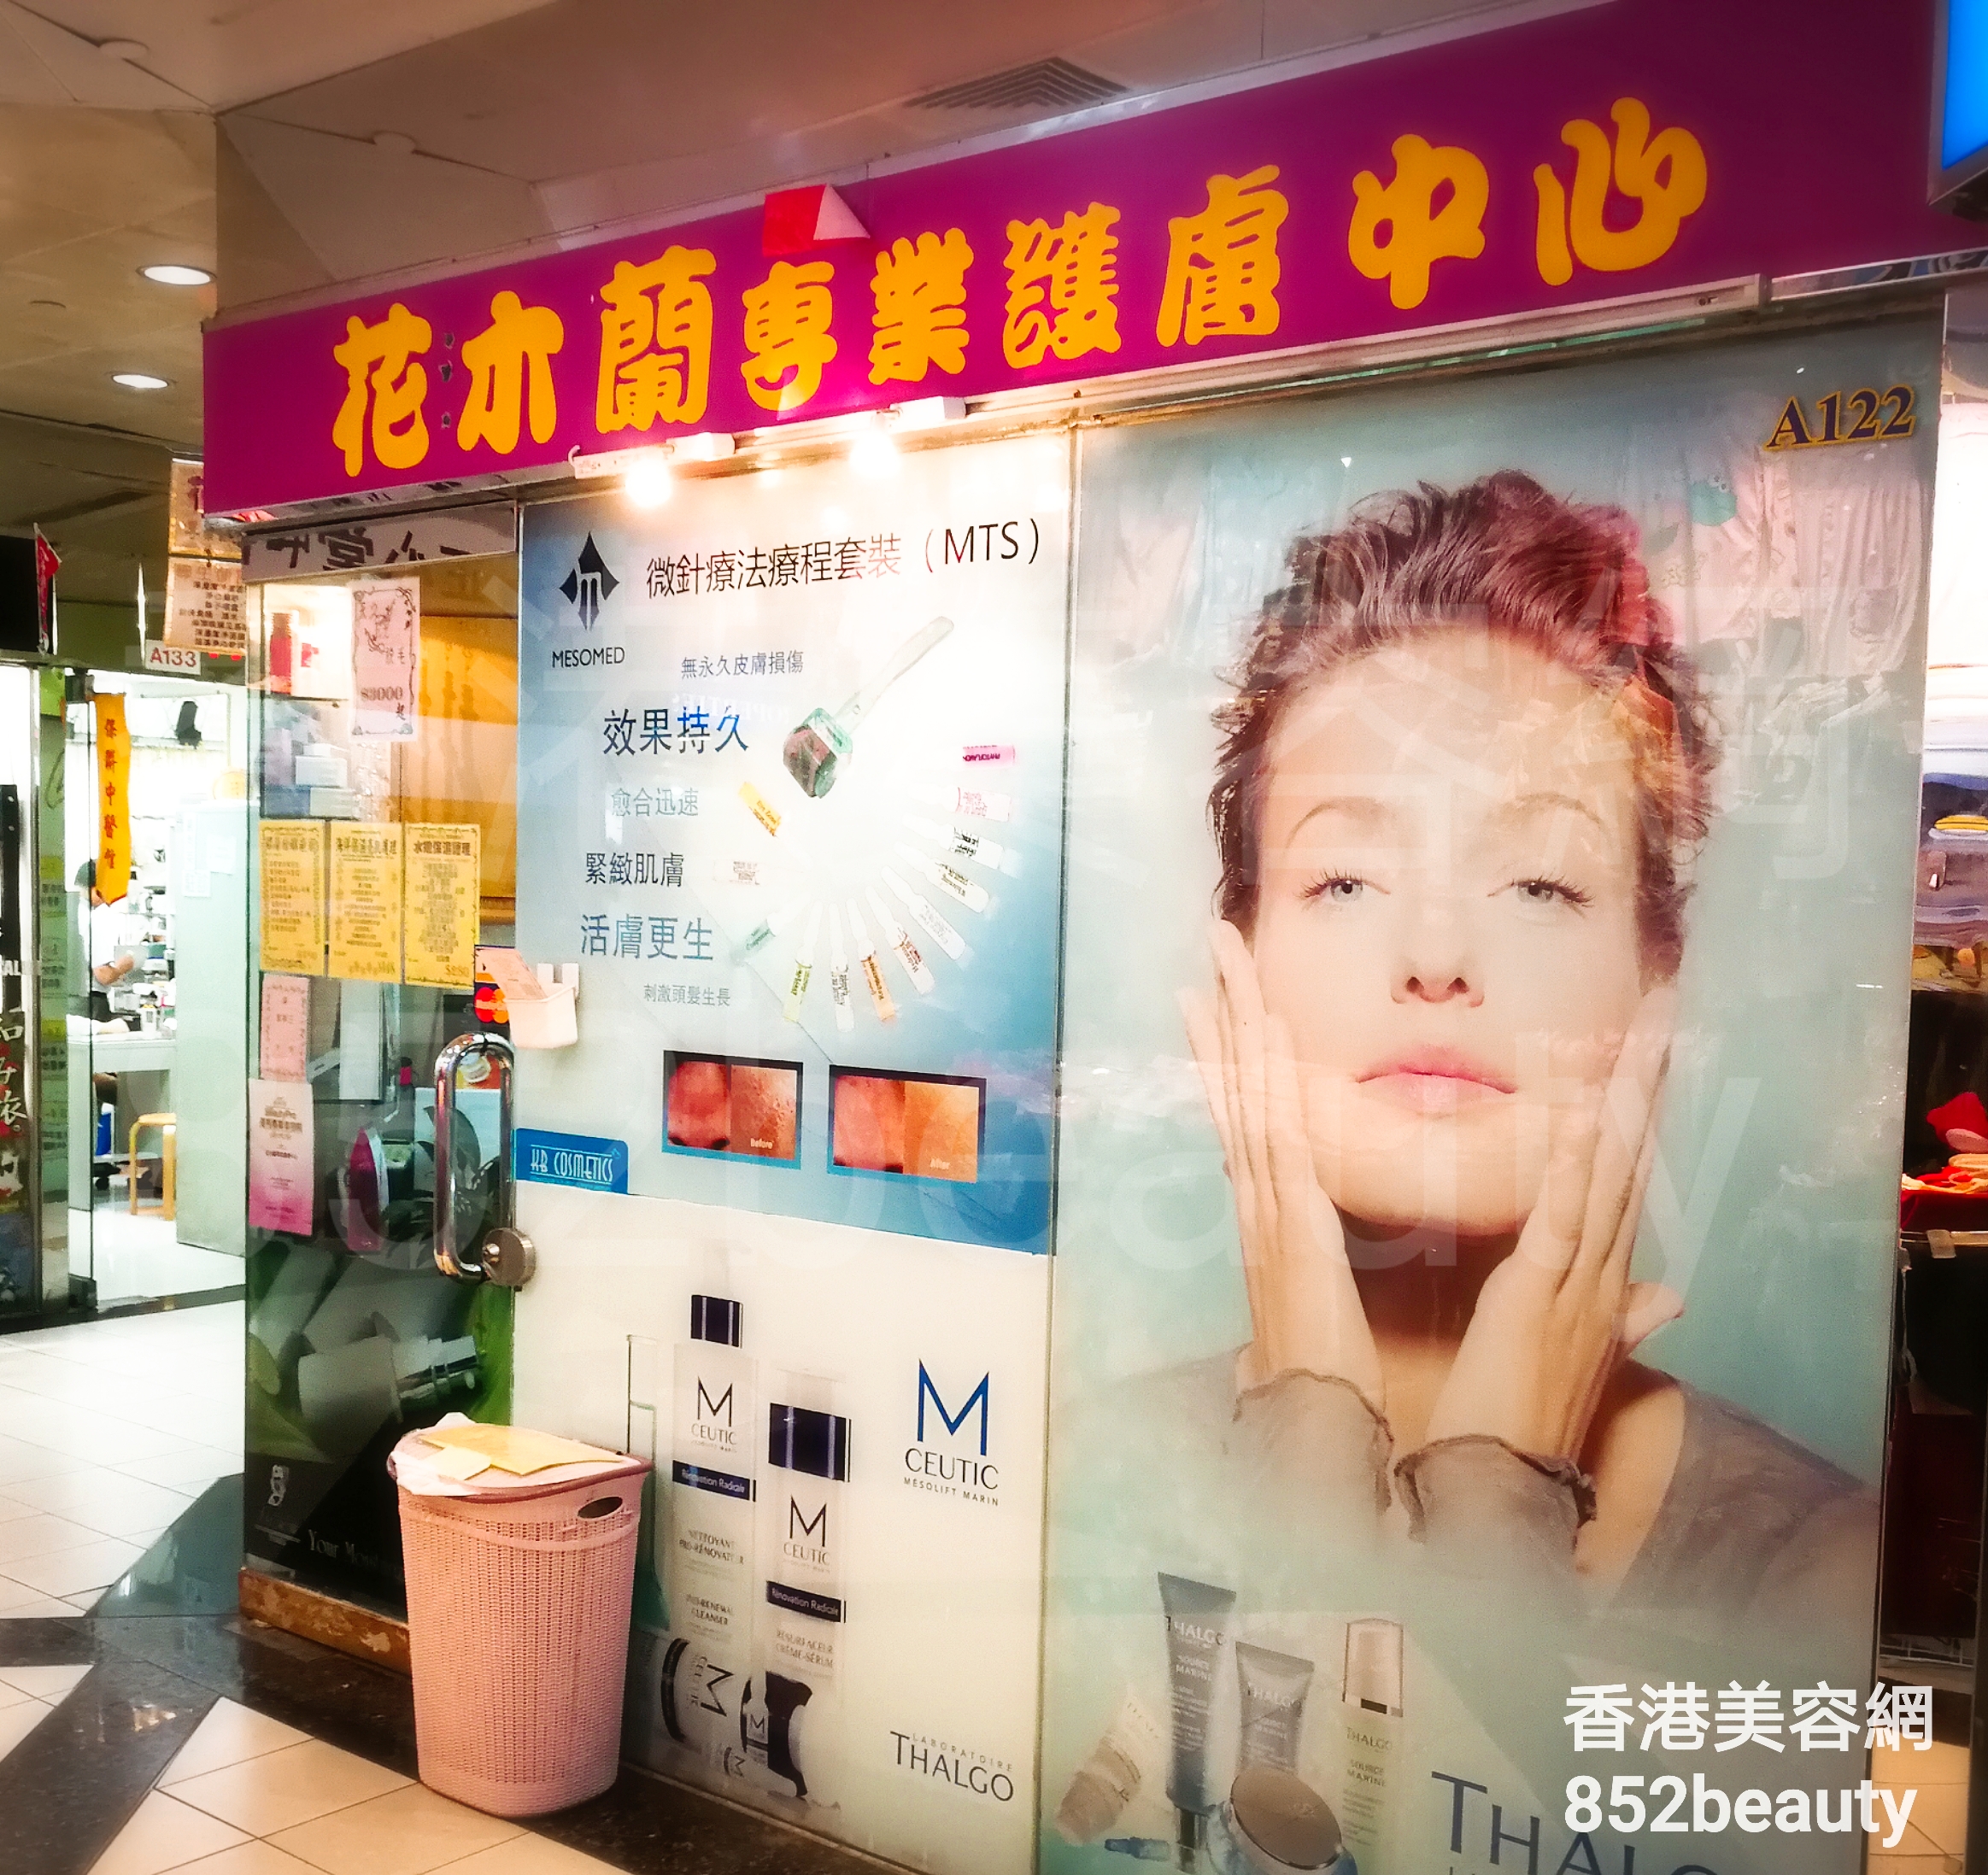 Medical Aesthetics: 花木蘭 專業護膚中心